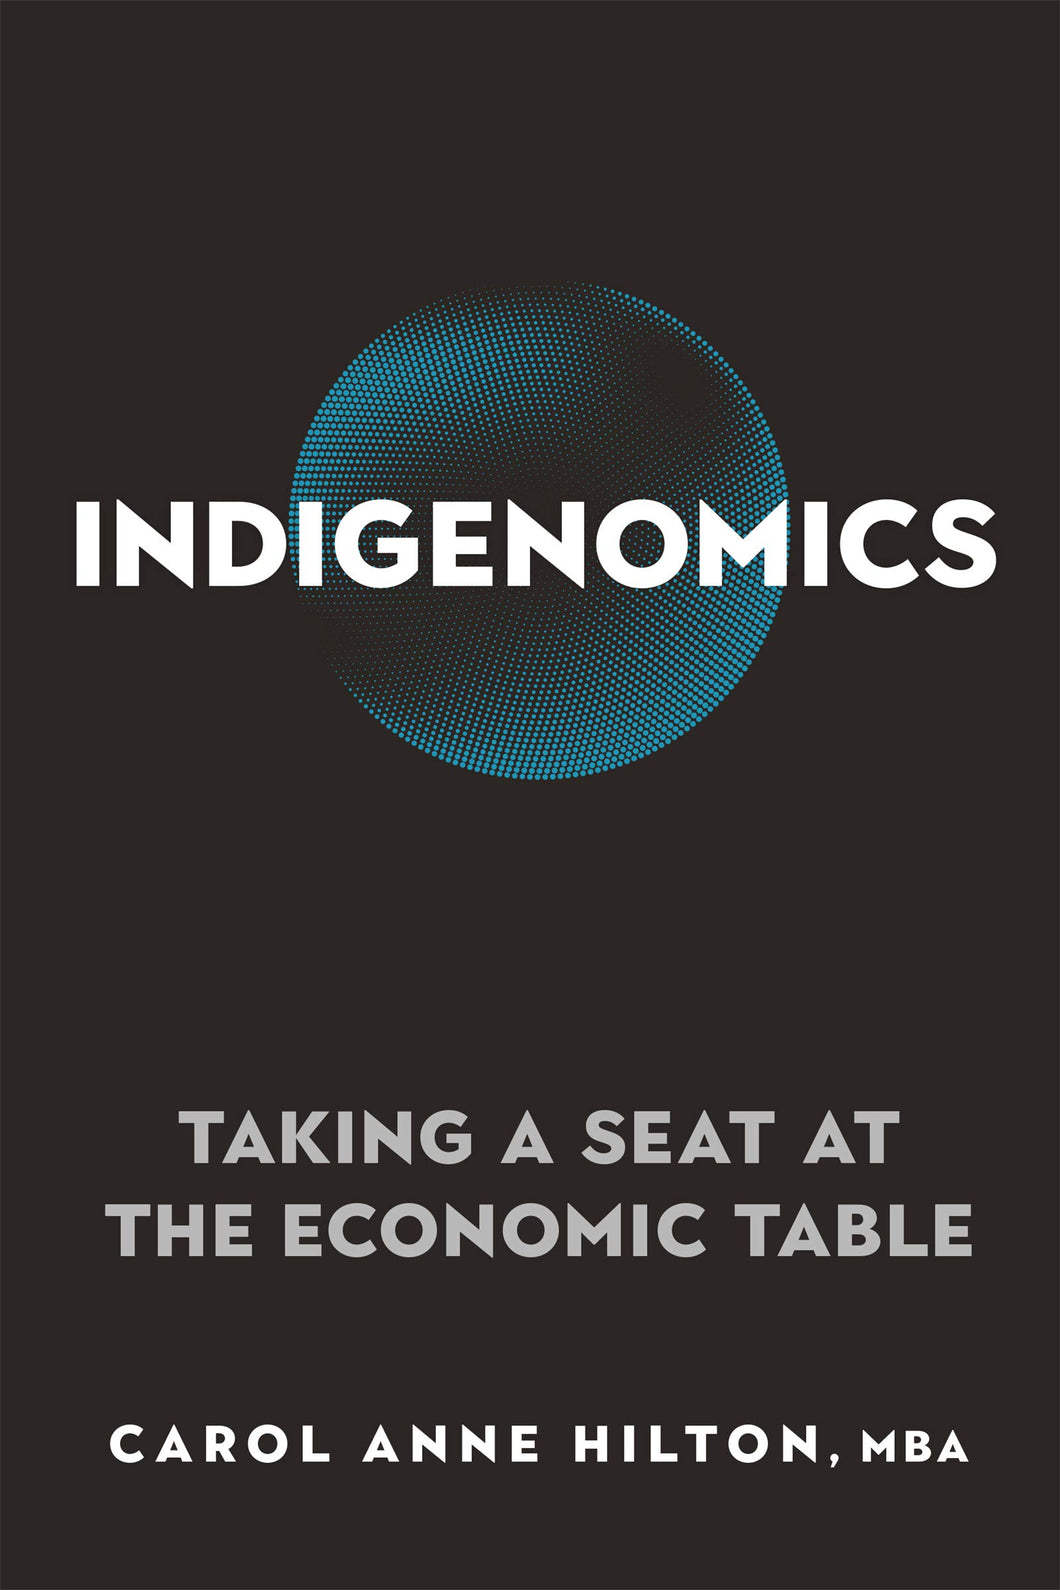 Indigenomics: Taking a Seat at the Economic Table [Carol Anne Hilton]